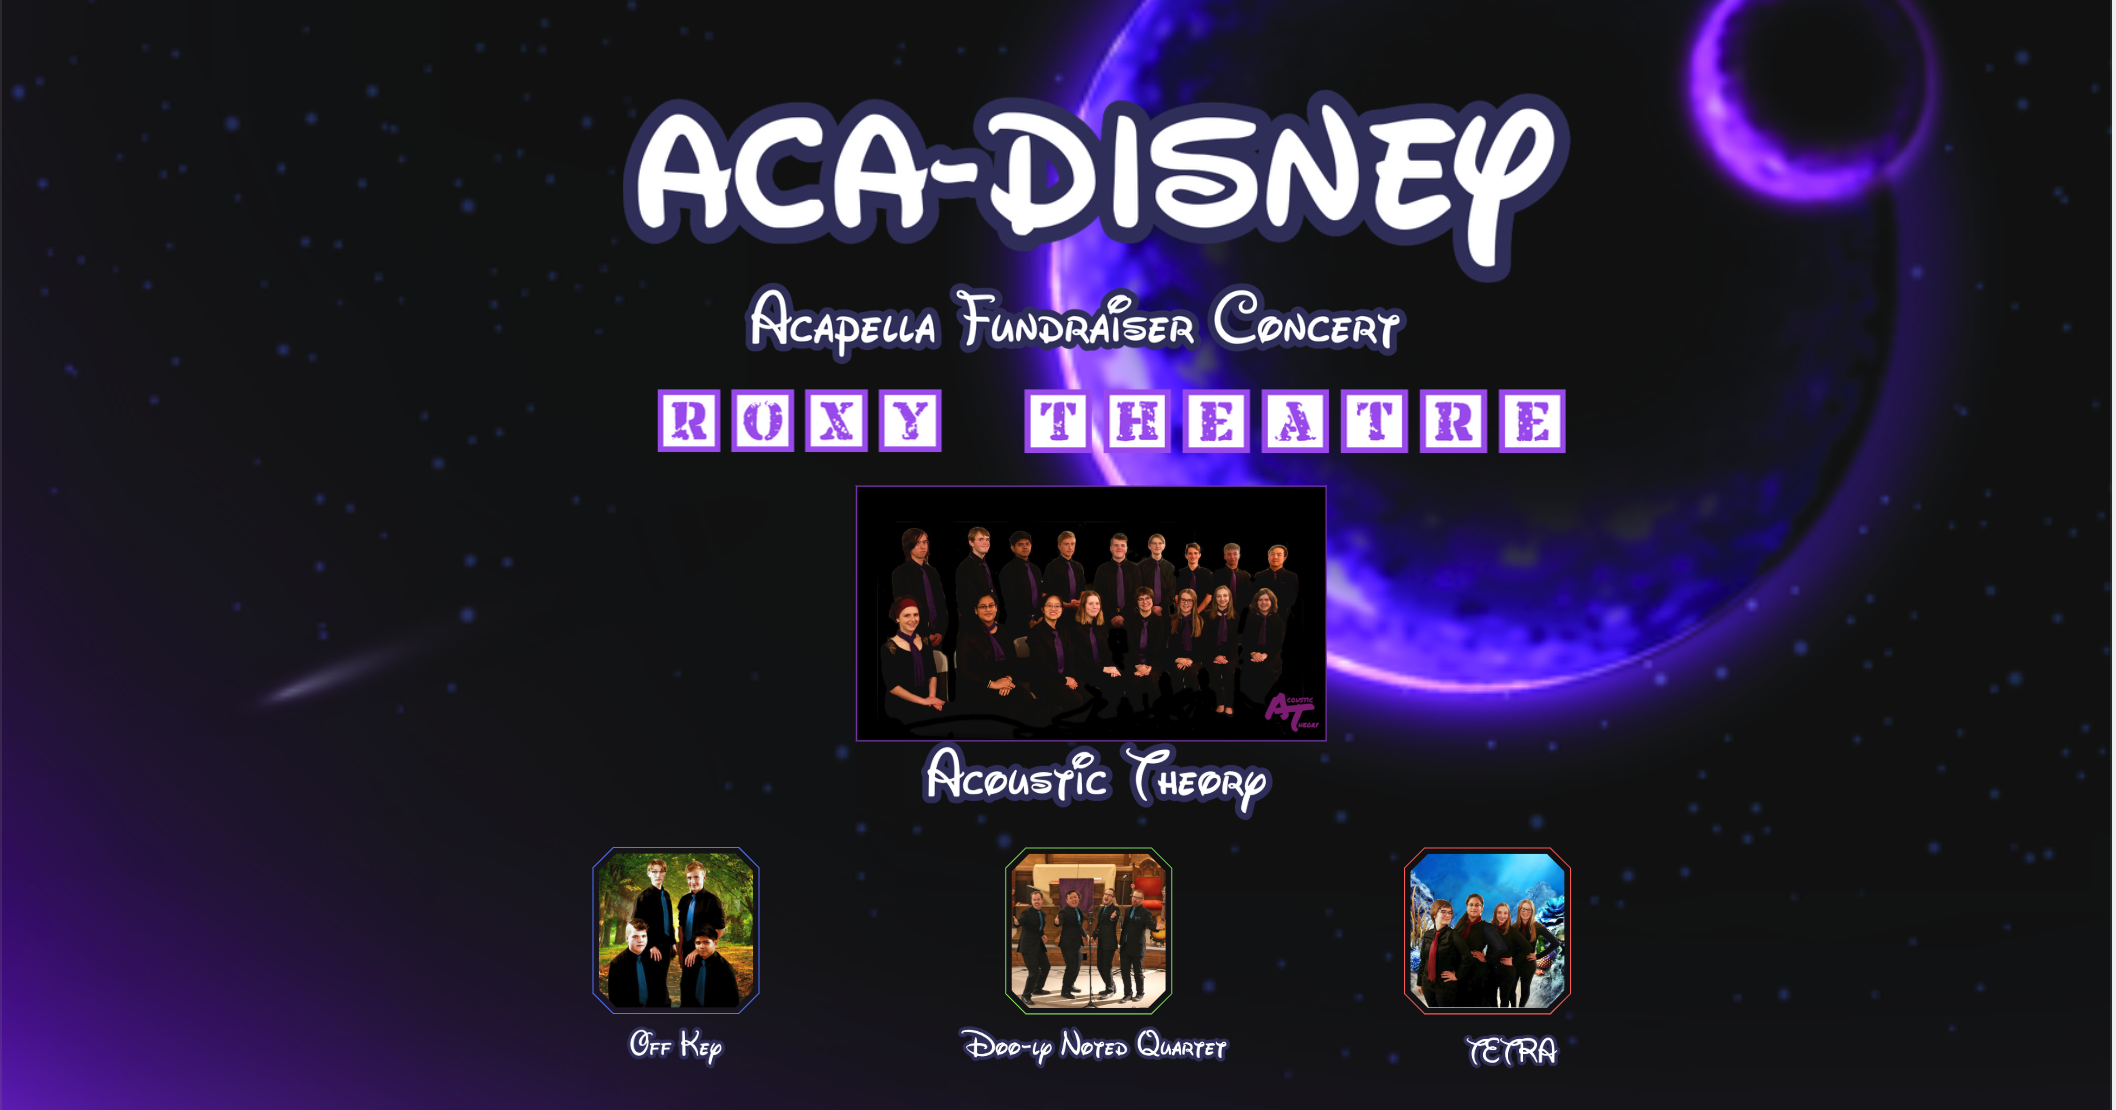 Aca-Disney Concert!!!